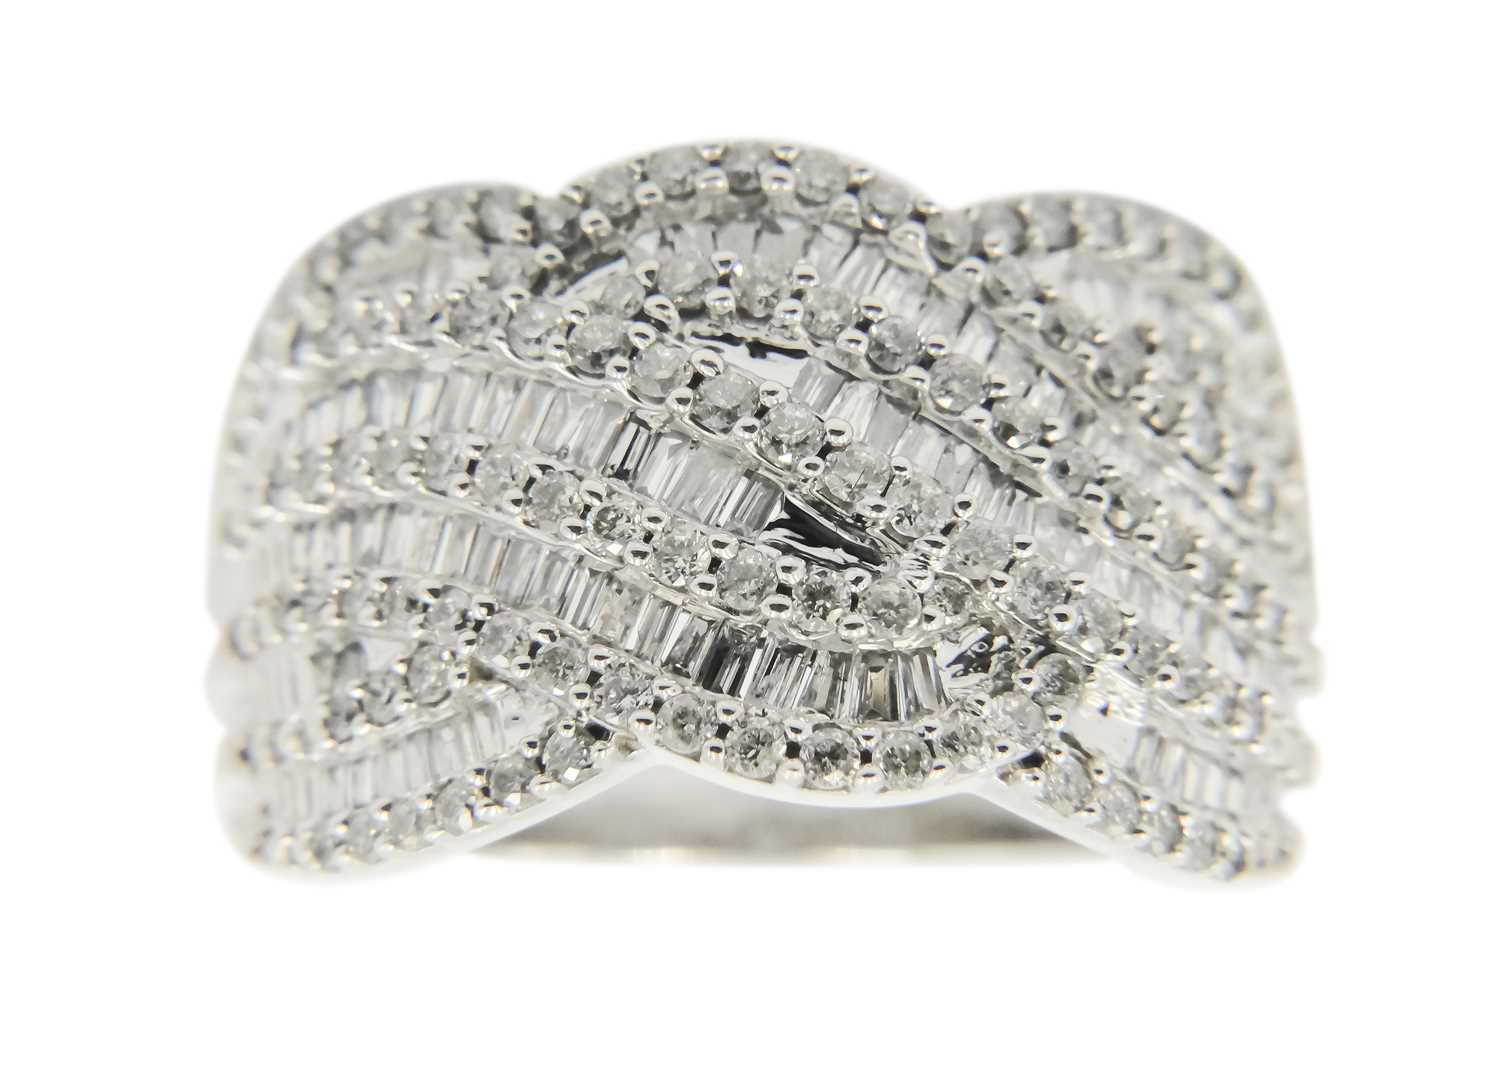 A 9ct white gold diamond set wave design dress ring.